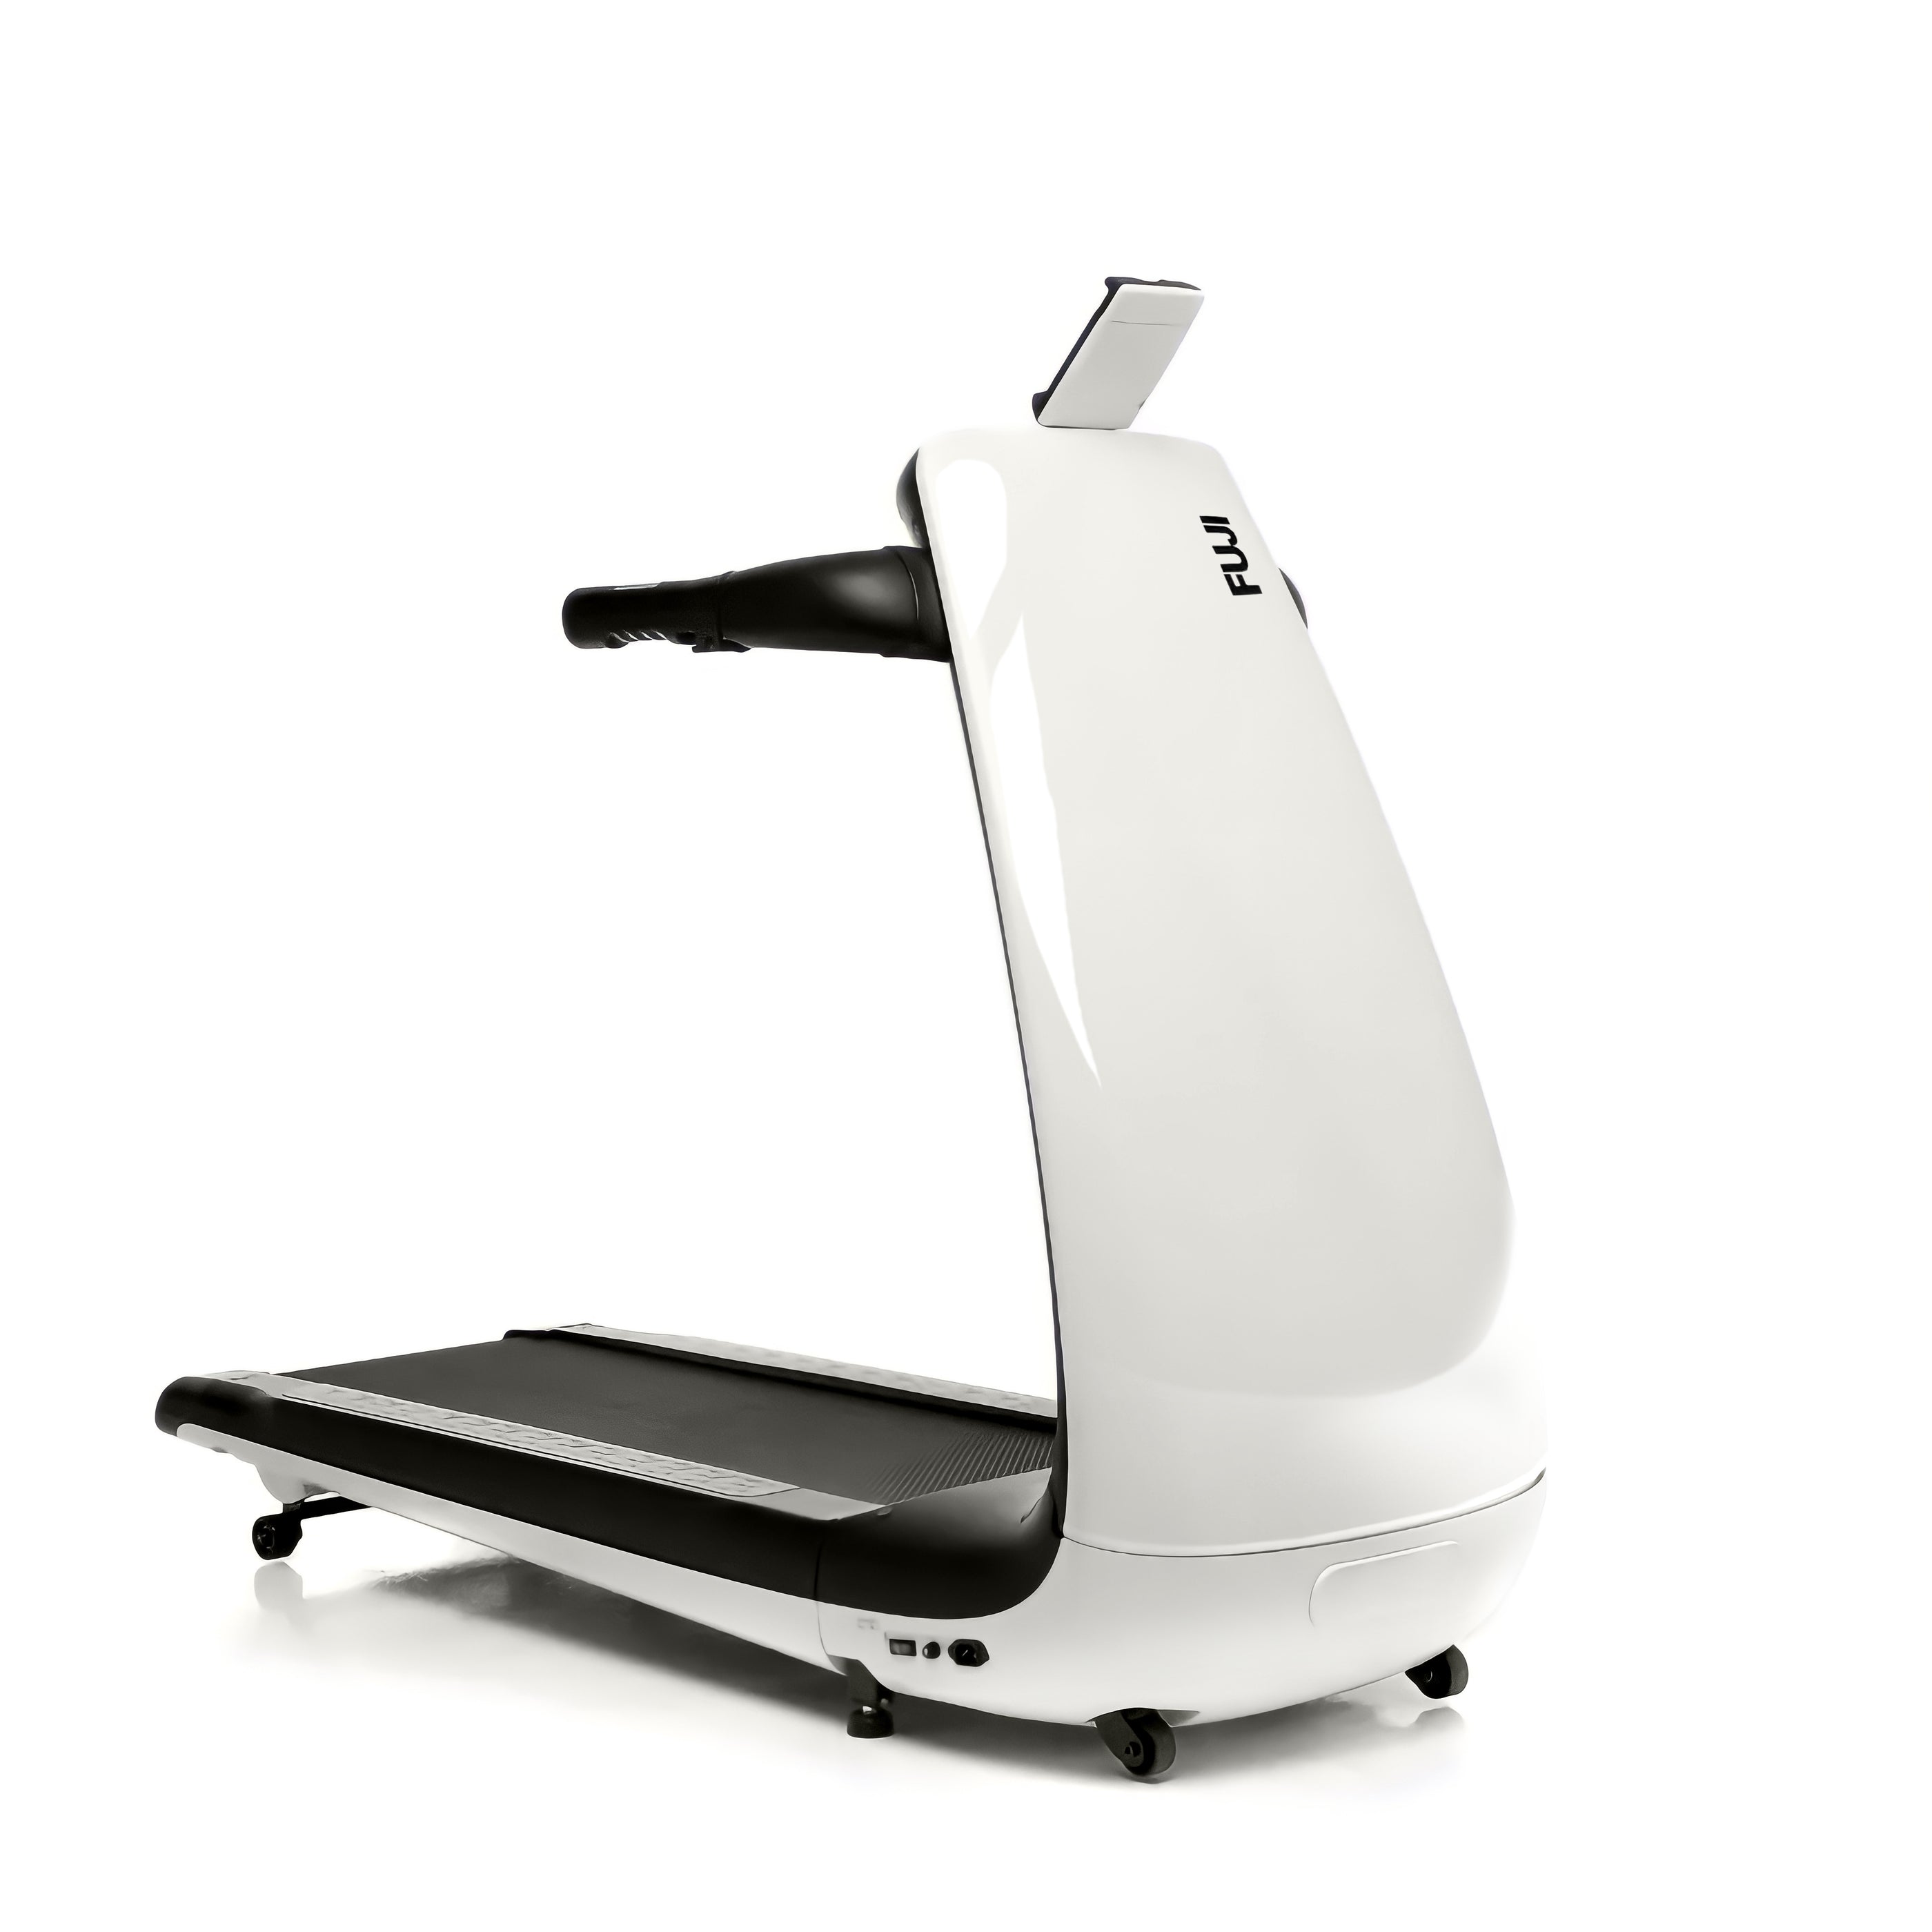 Ex-Display Fuji Treadmills for Sale, As New! - FujiHealth 